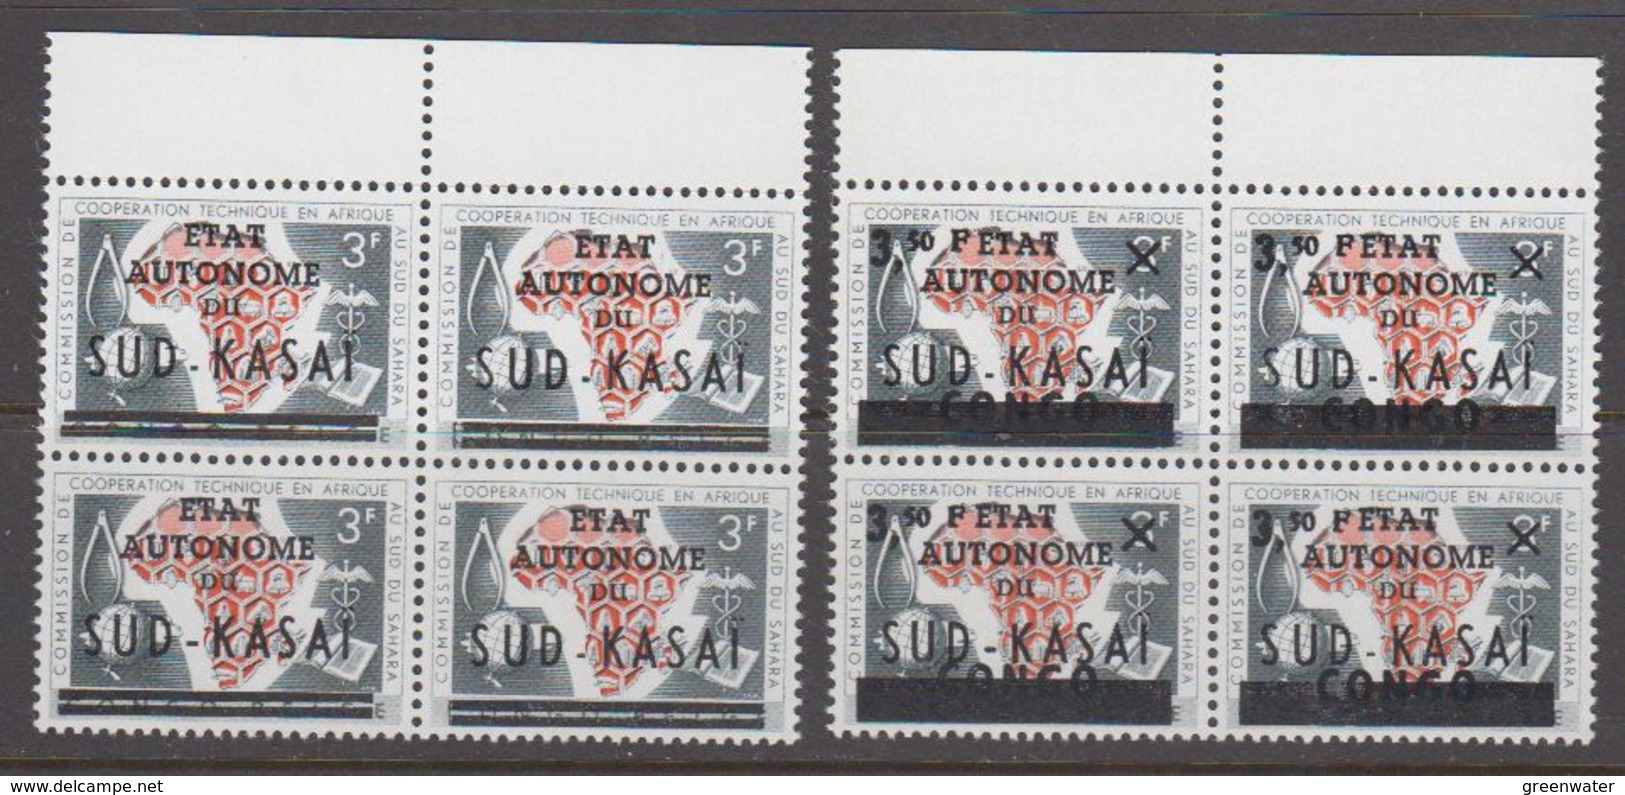 Zuid-Kasaï 1961 2w Bl V. 4 ** Mnh (40995D) - Zuid-Kasaï